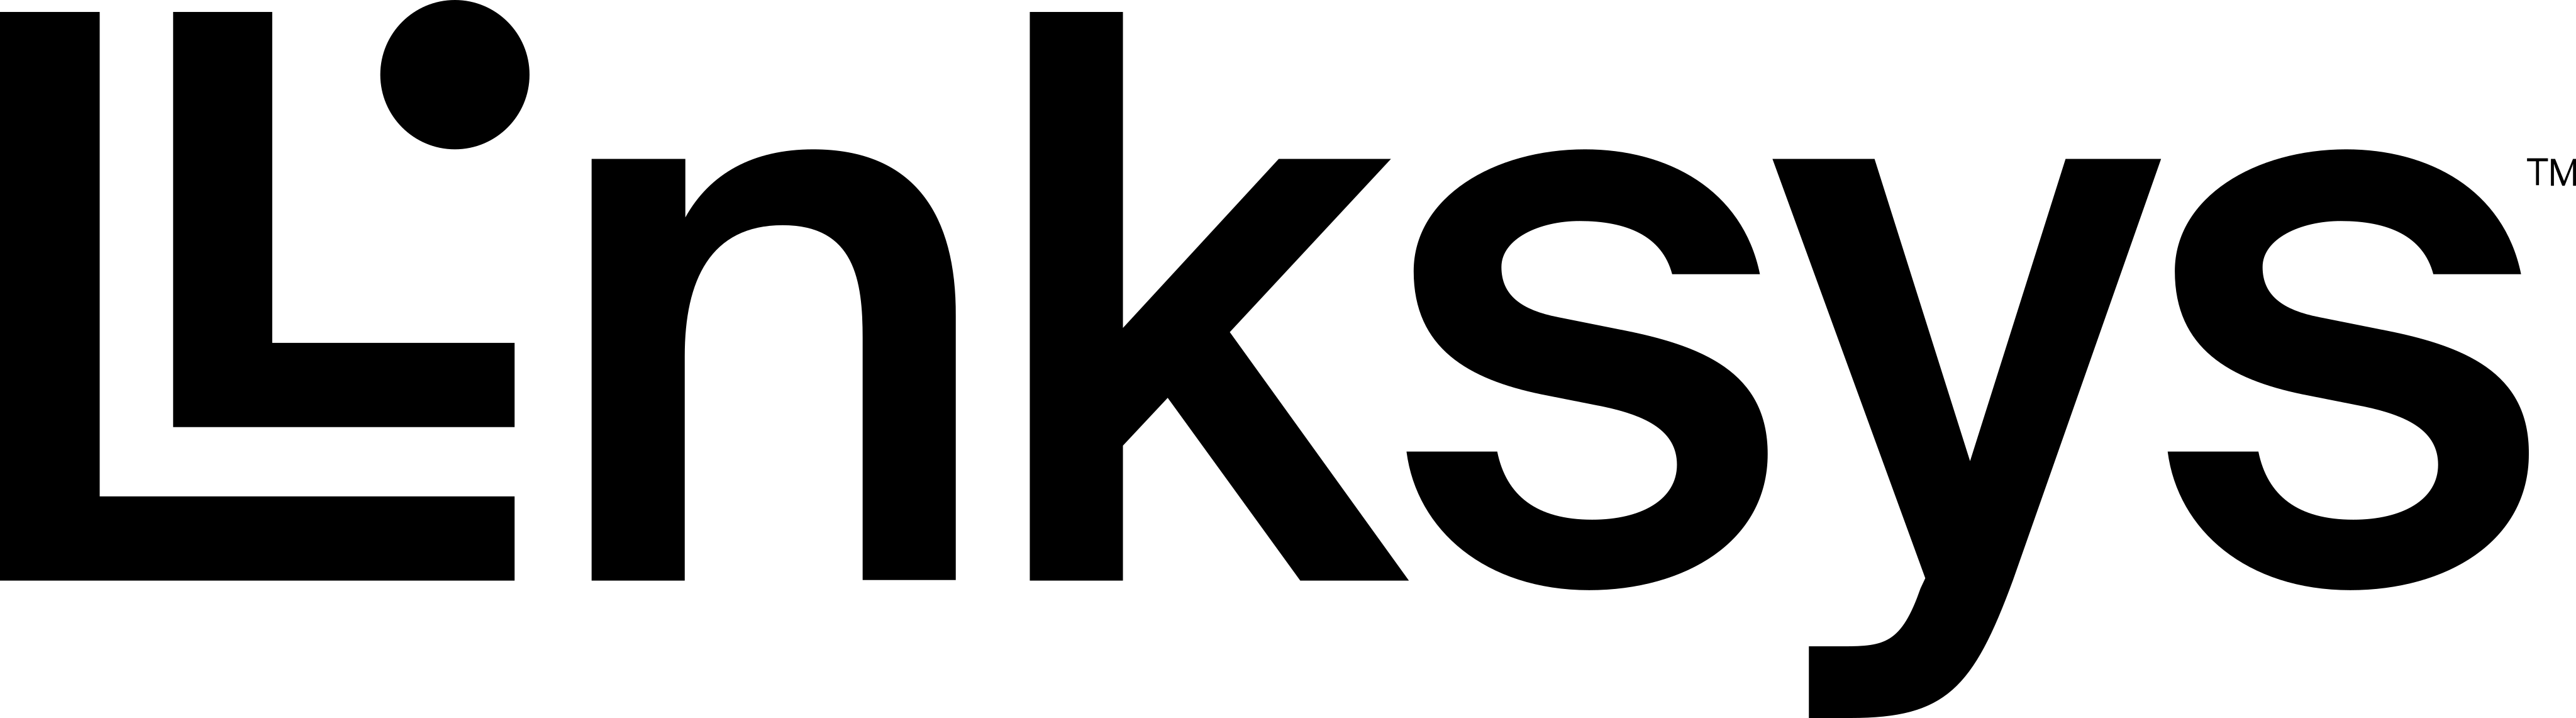 linksys logo - Linksys Logo